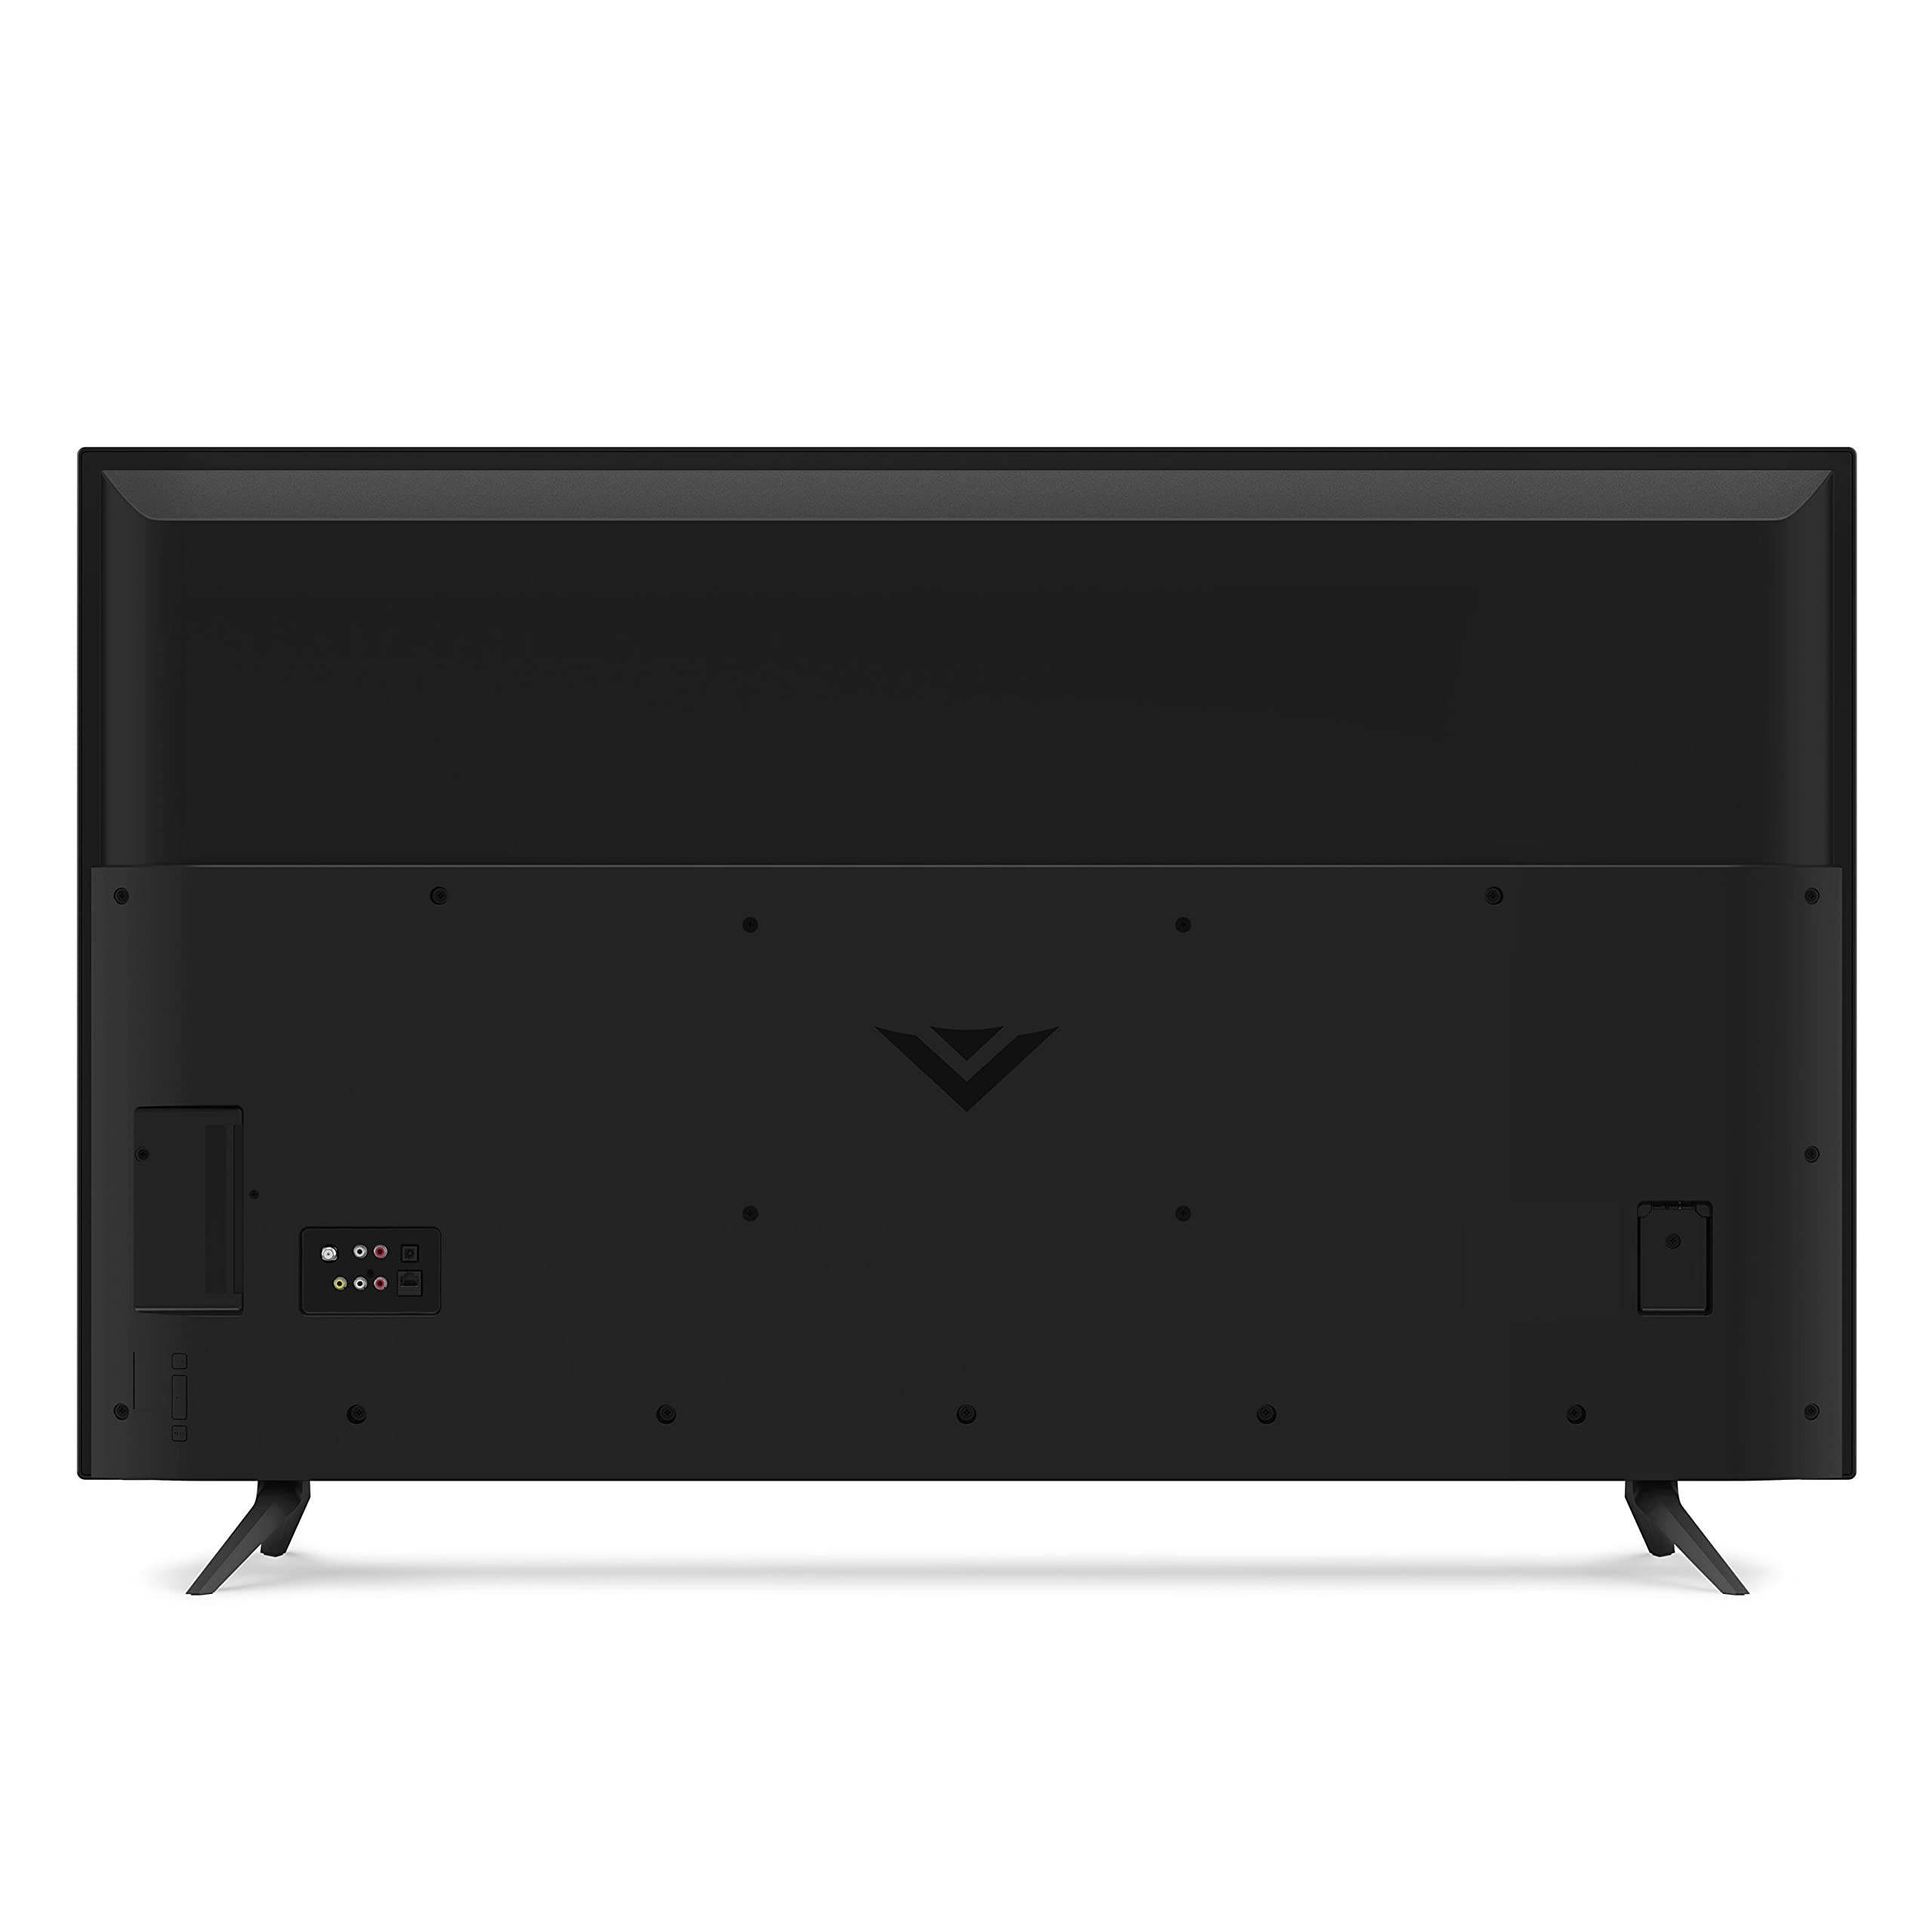 VIZIO 55-Inch V-Series 4K UHD LED Smart TV with Voice Remote, Dolby Vision, HDR10+, Alexa Compatibility, V555-J01, 2021 Model